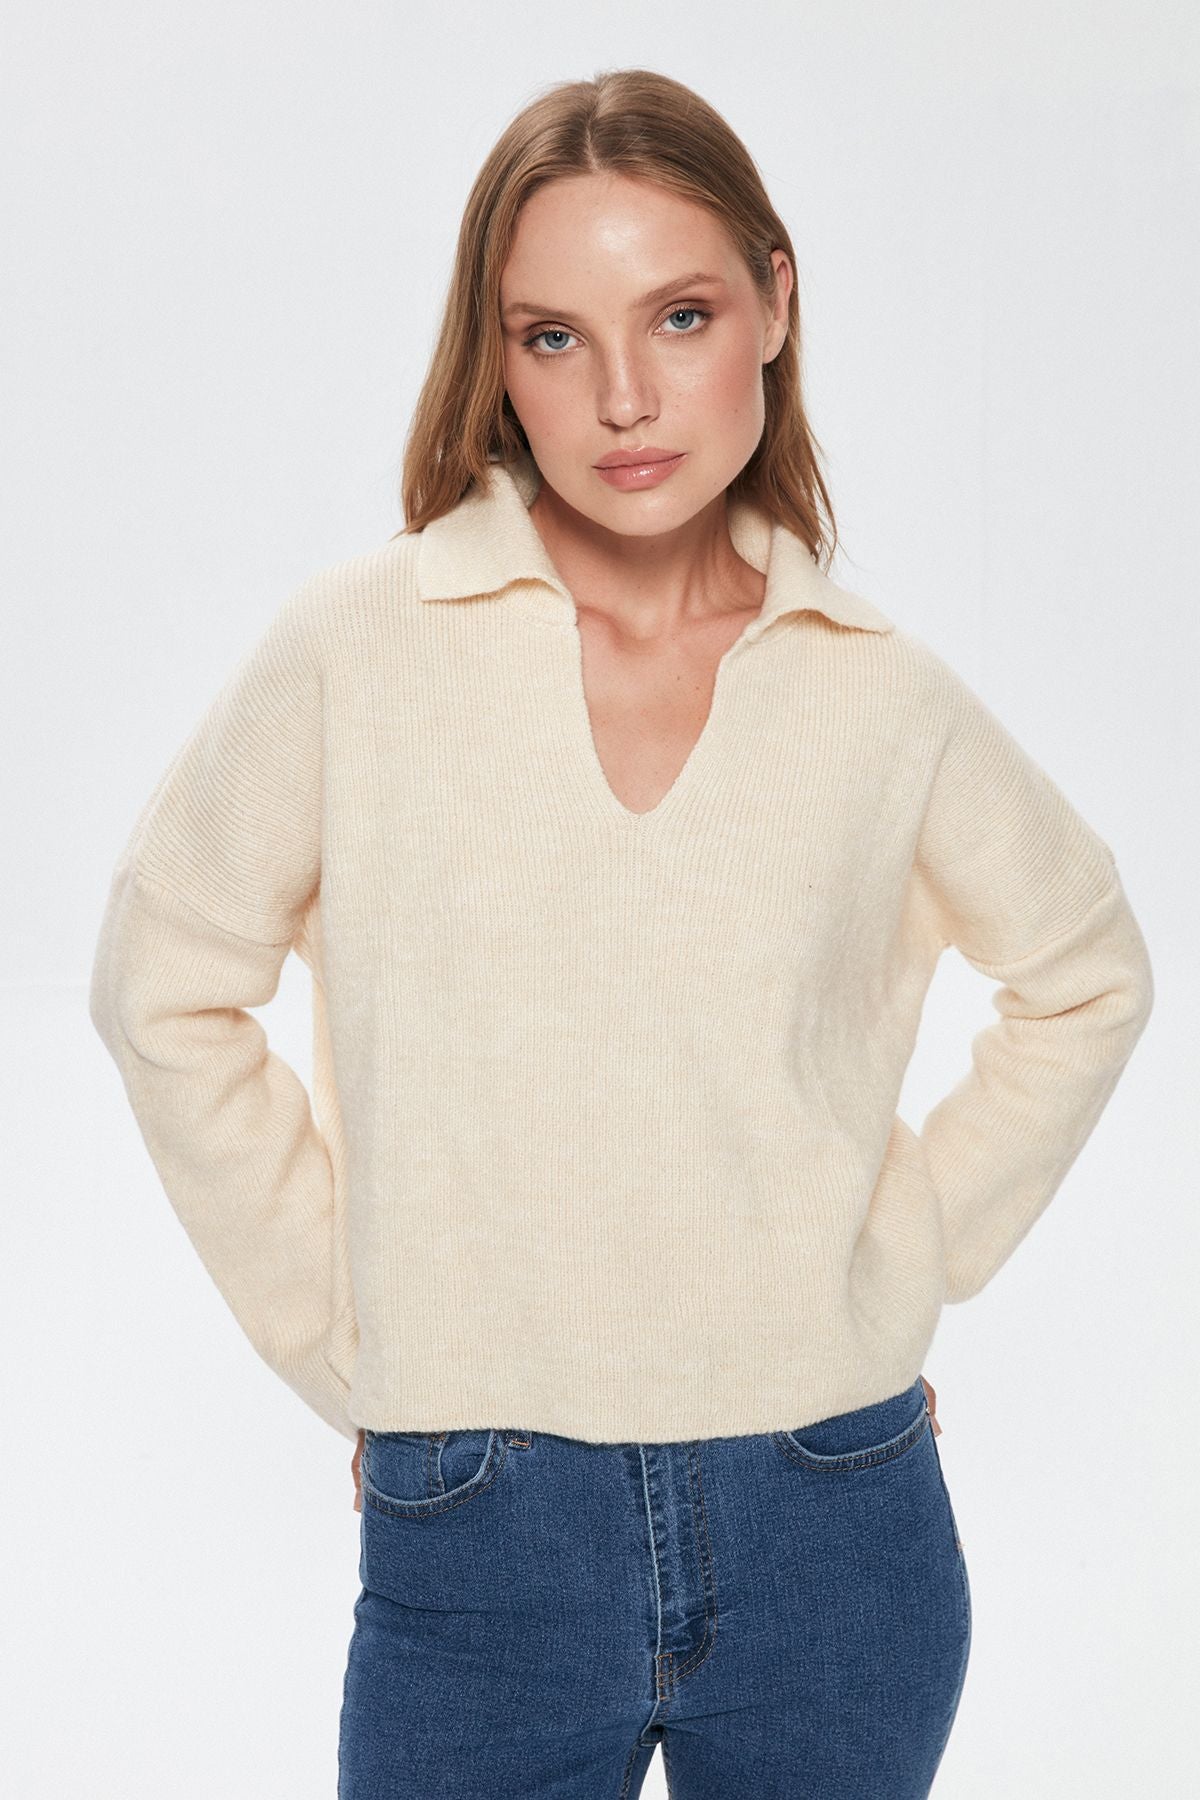 Shirt Collar Crop Sweater Cream